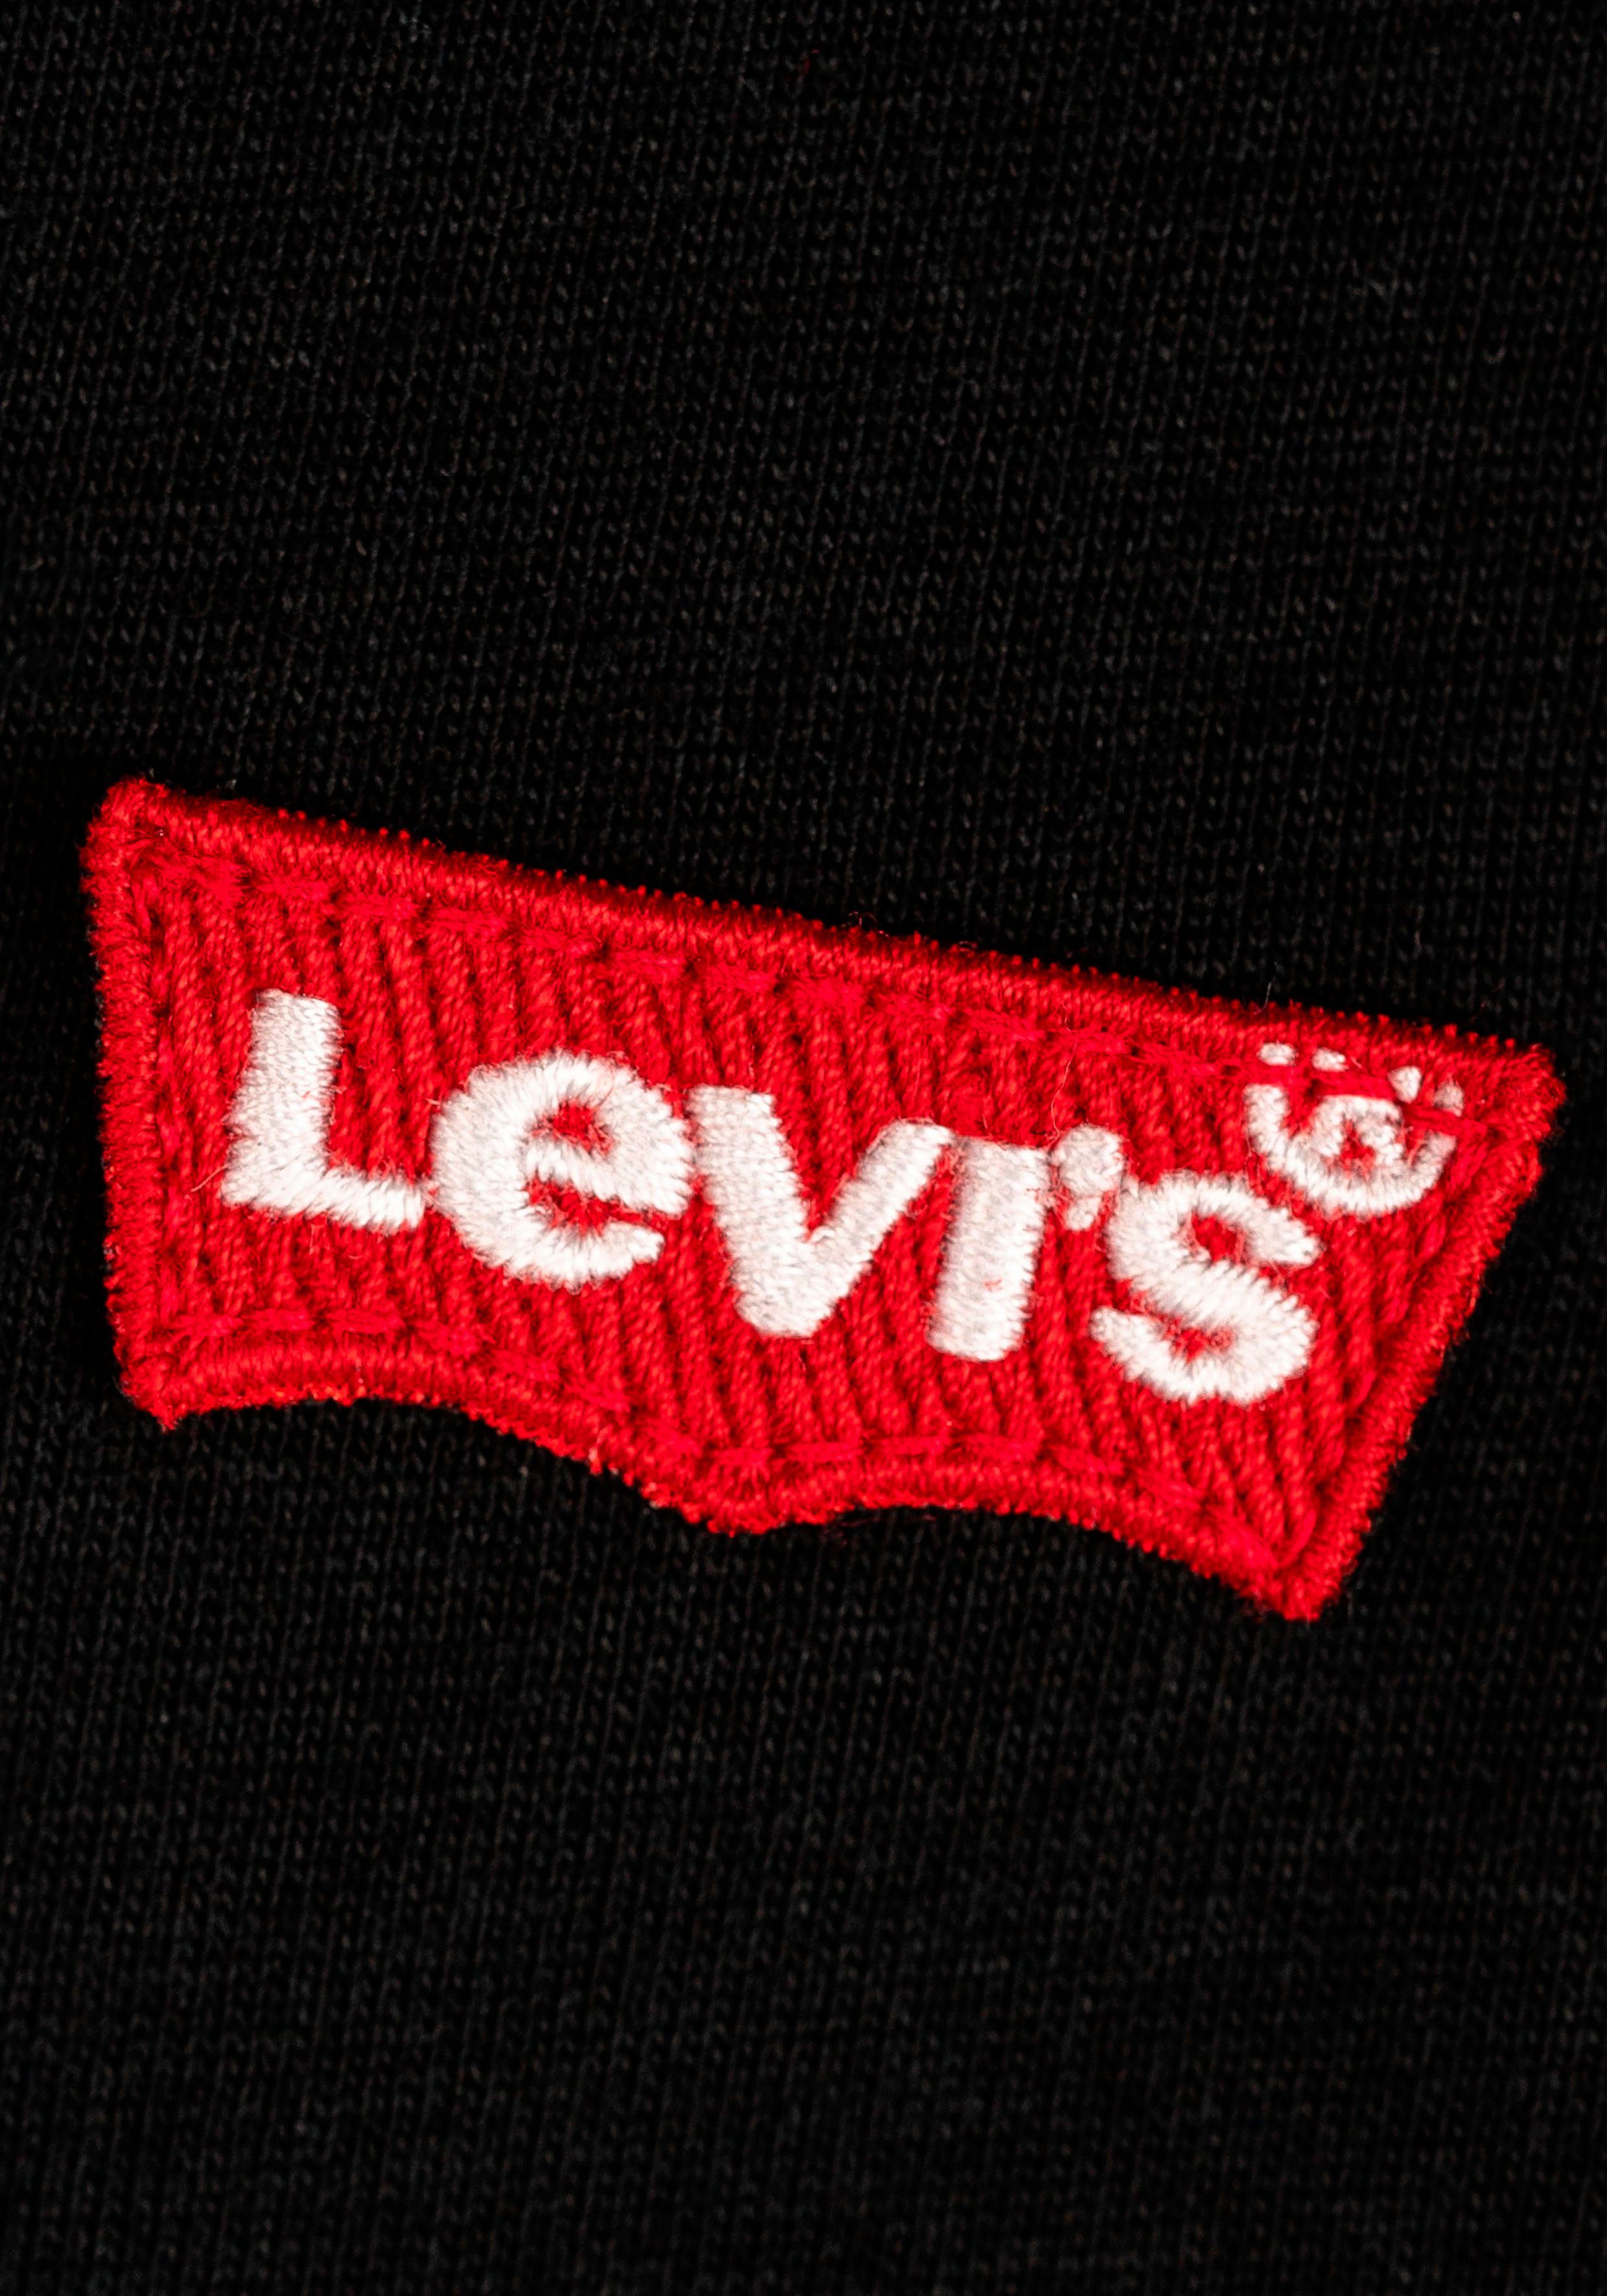 Levi's® Kids T-Shirt BATWING black BOYS CHEST HIT for